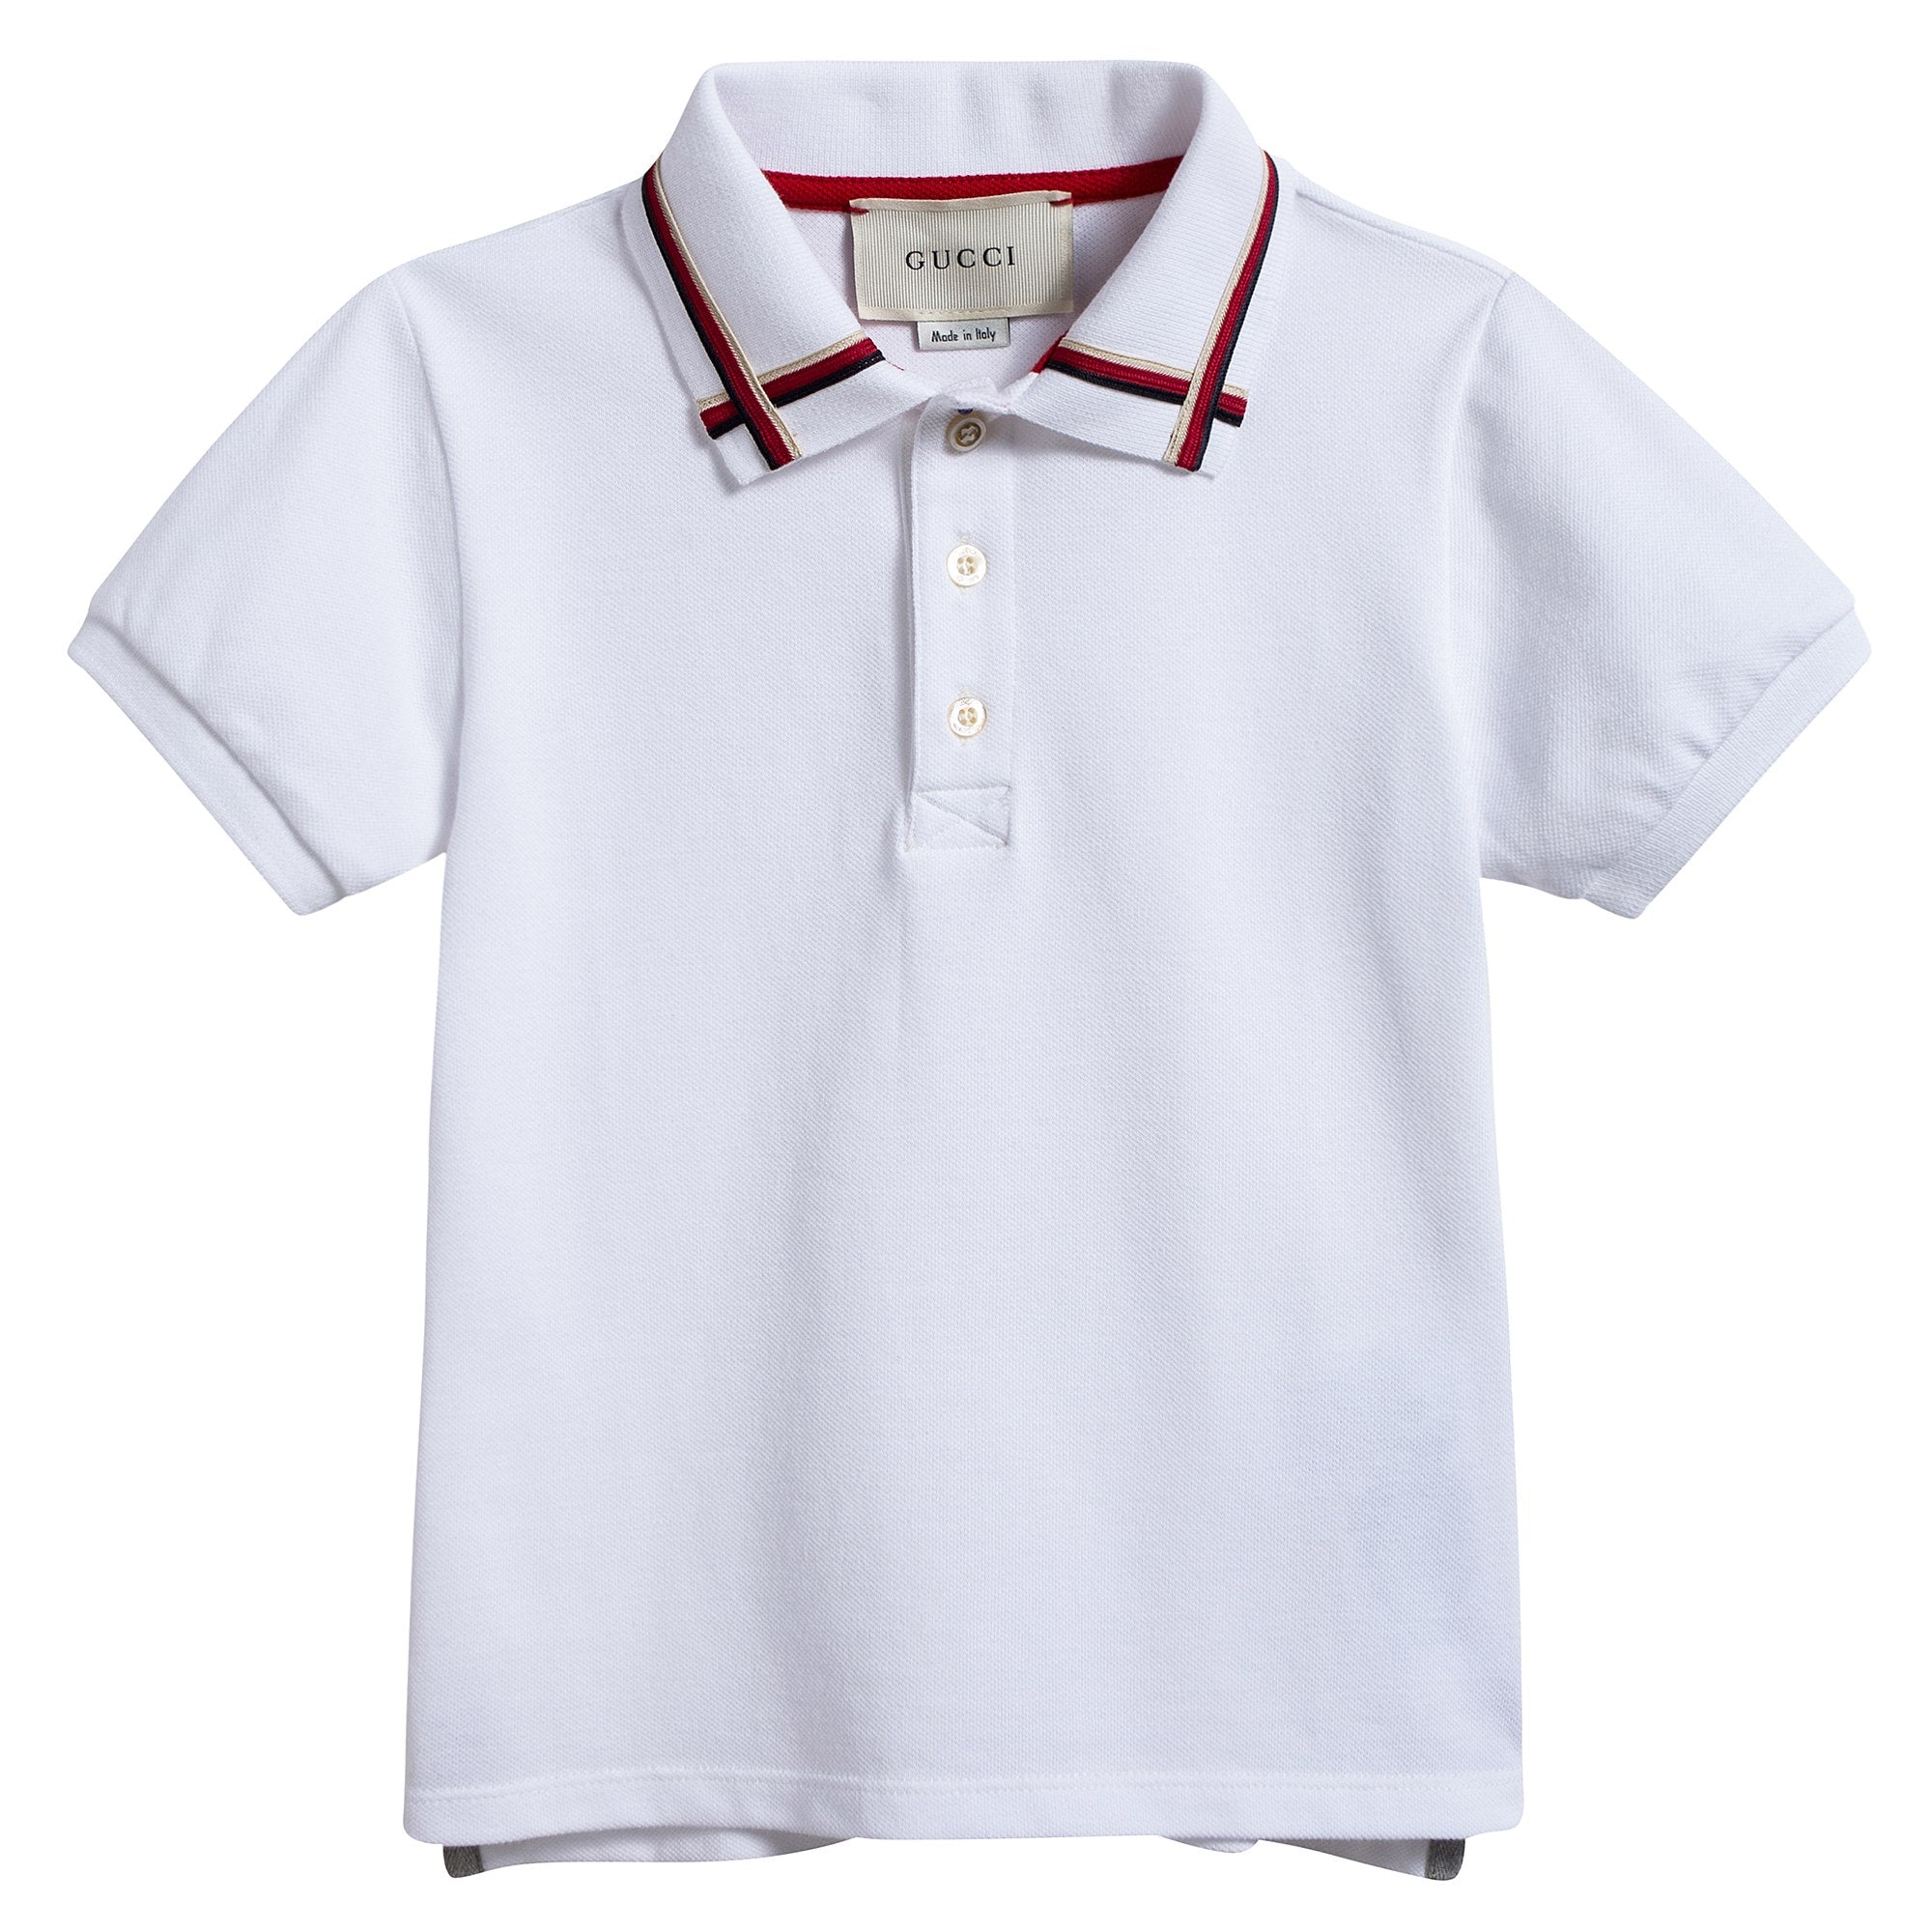 Boys White Cotton Polo Shirt With Check Trim